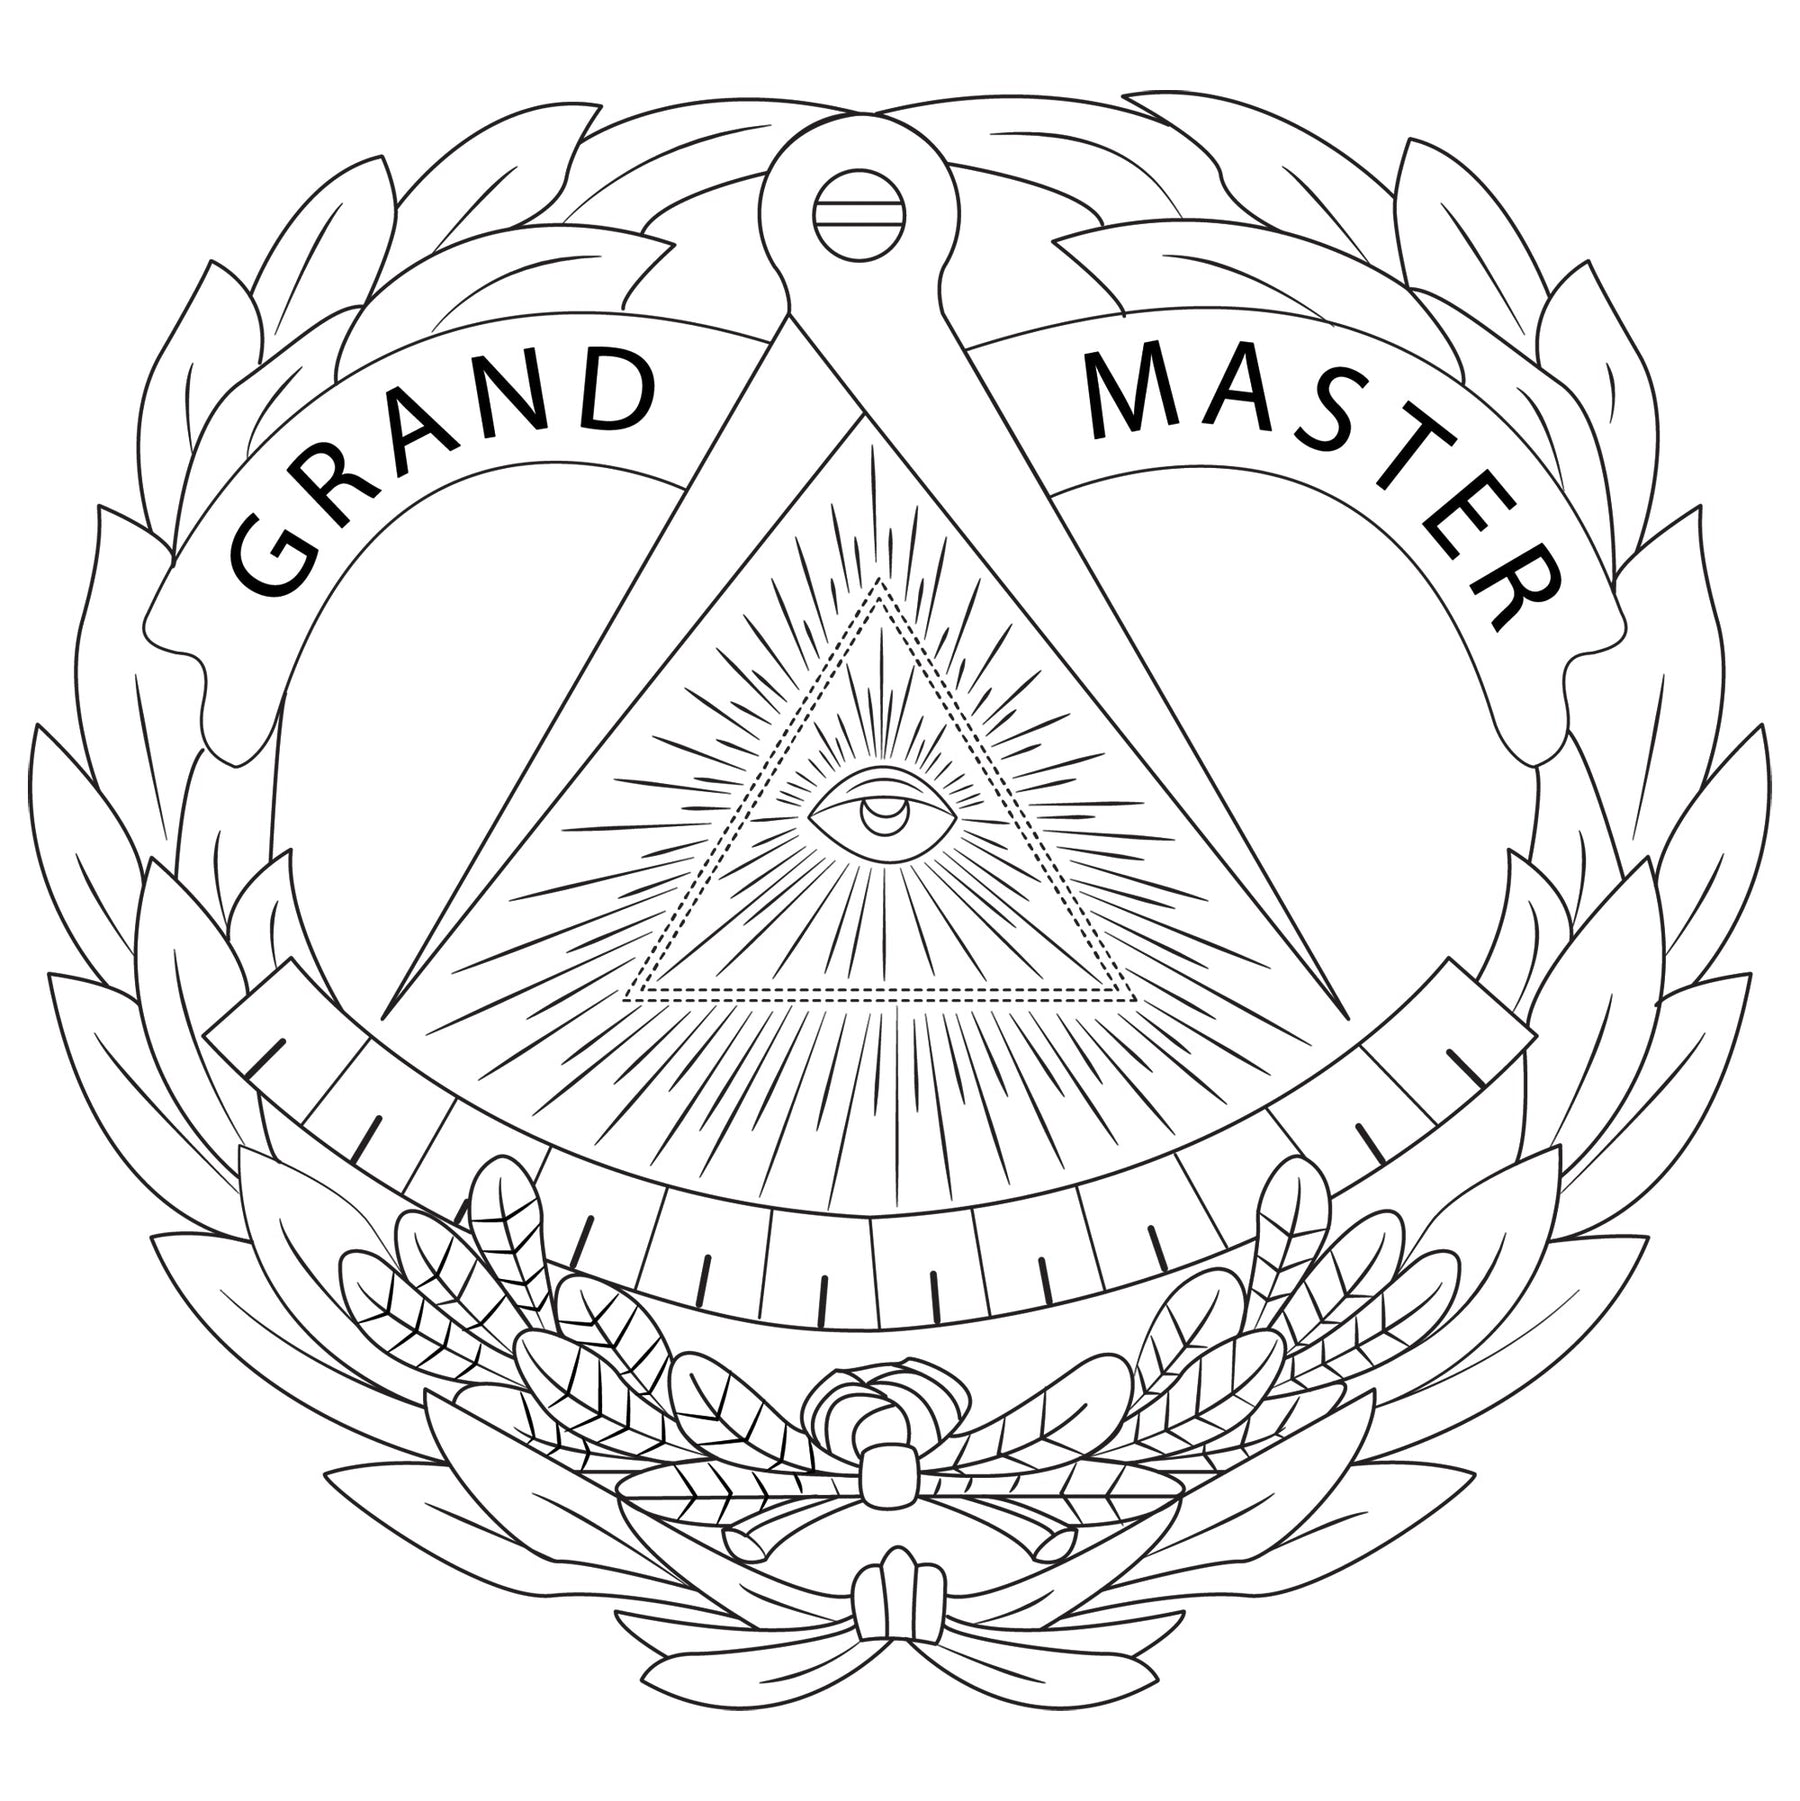 Grand Master Blue Lodge Lamp - 3D Moon Various Colors - Bricks Masons